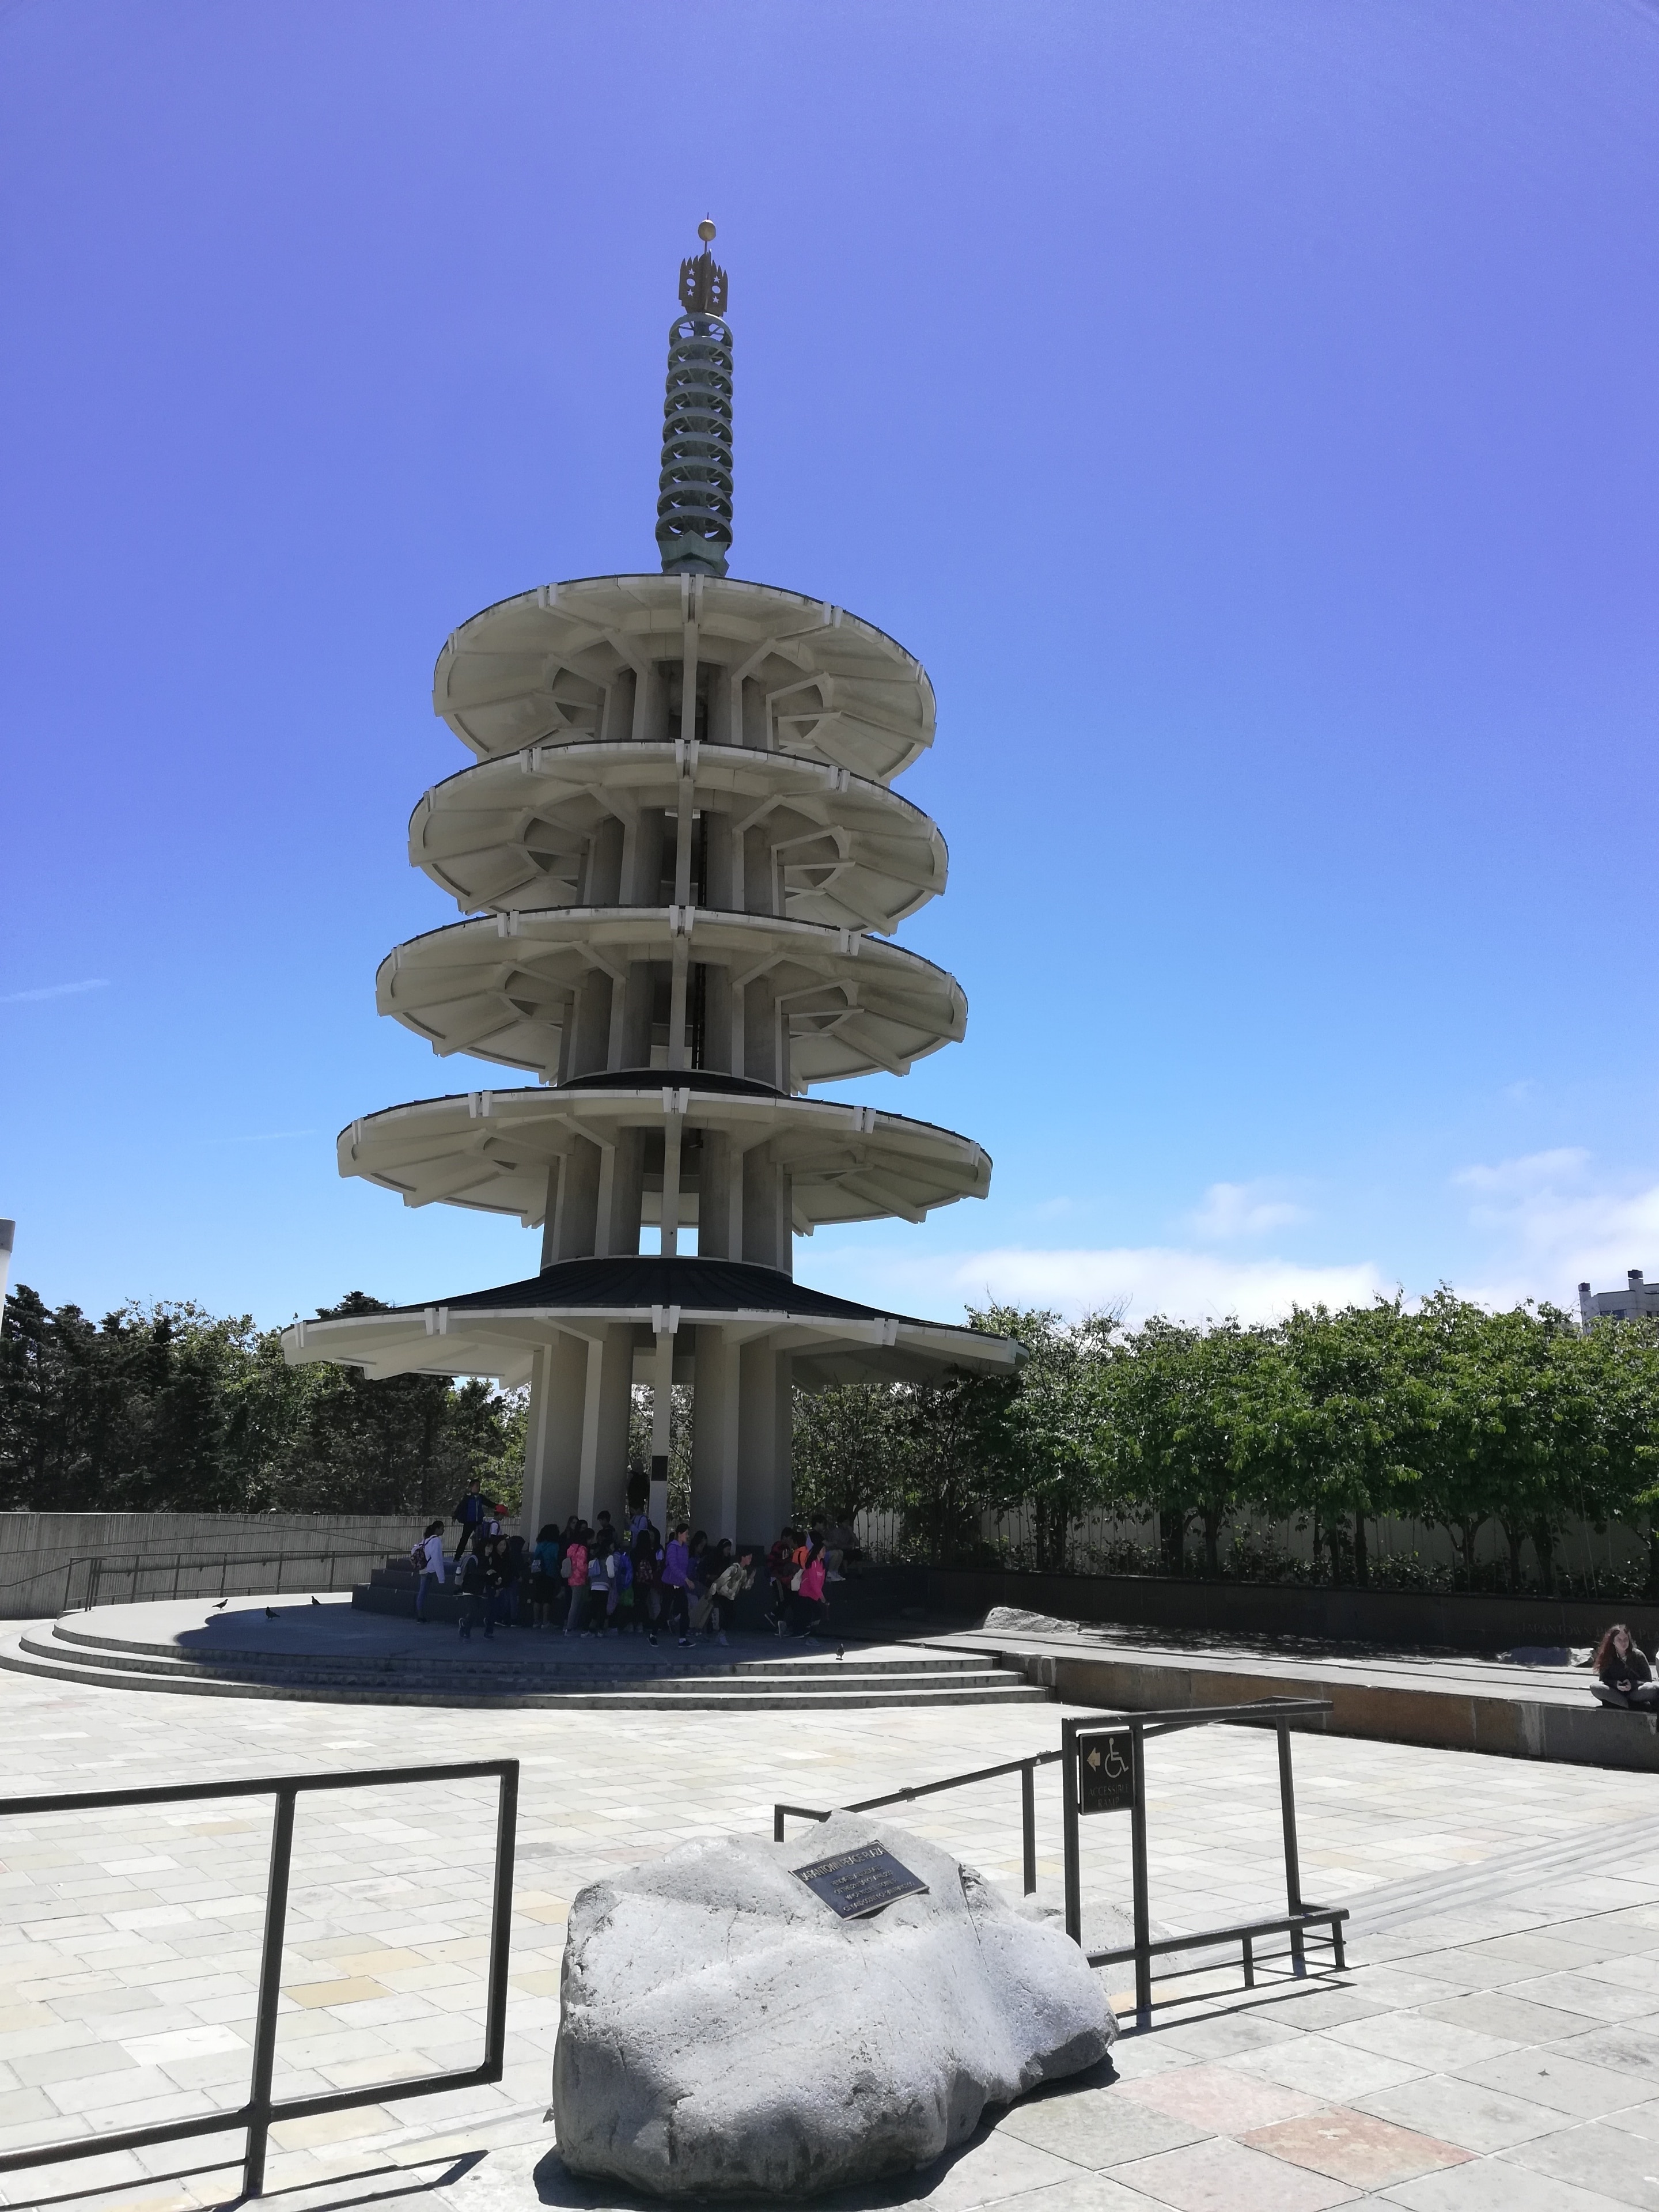 #japantownSF
#bluesky
#pagoda
#OrbitzTravel